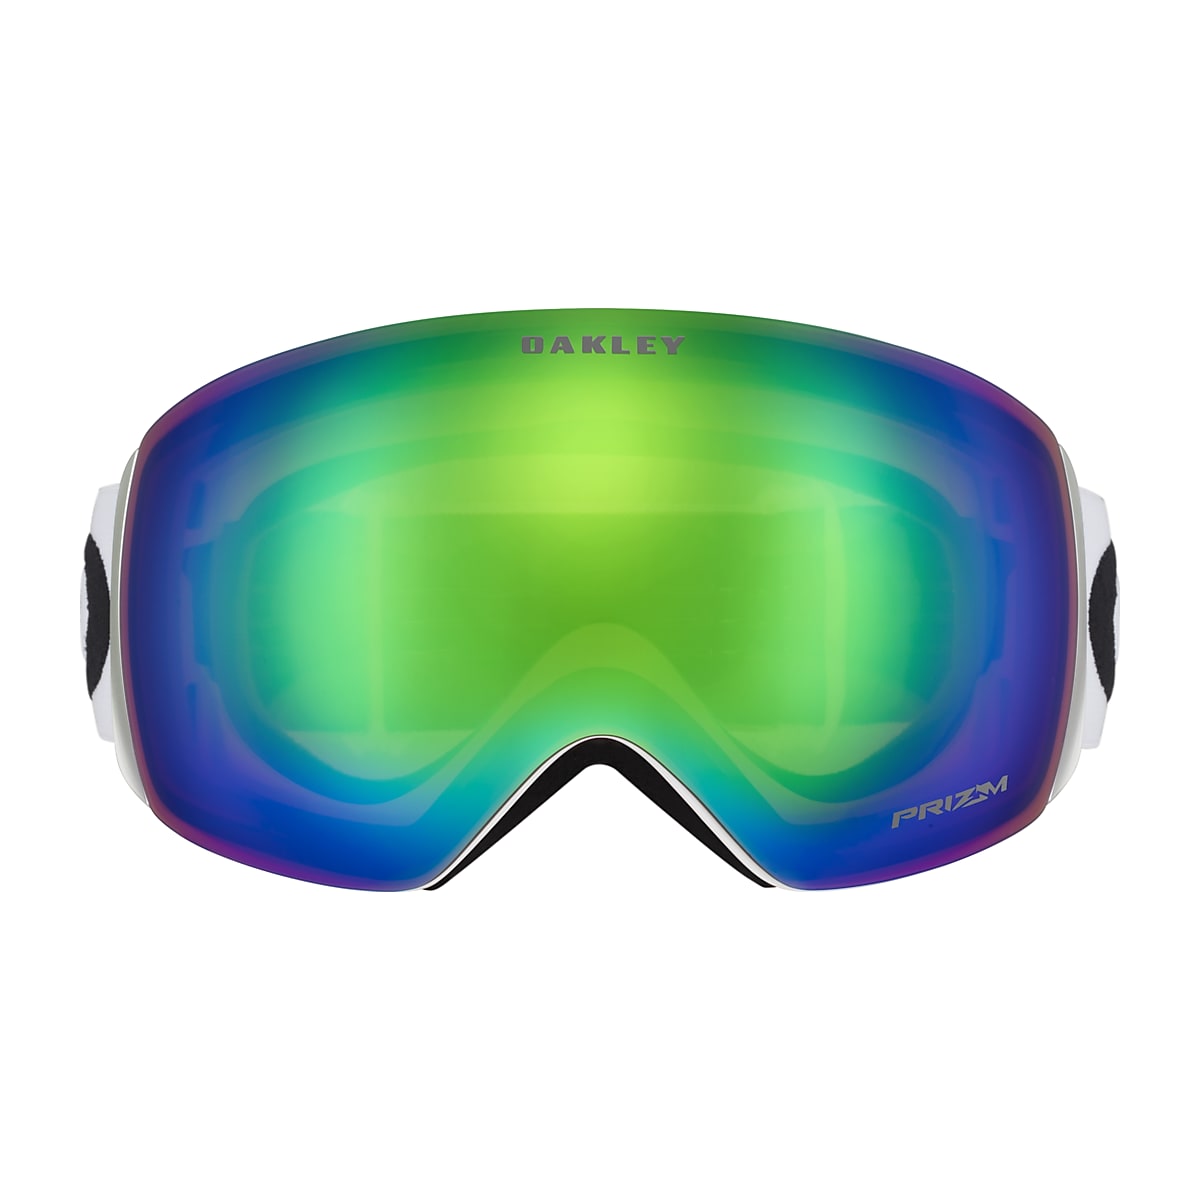 Oakley Flight Deck™ L Snow Goggles - Matte White - Prizm Snow Jade Iridium  - OO7050-36 | Oakley US Store